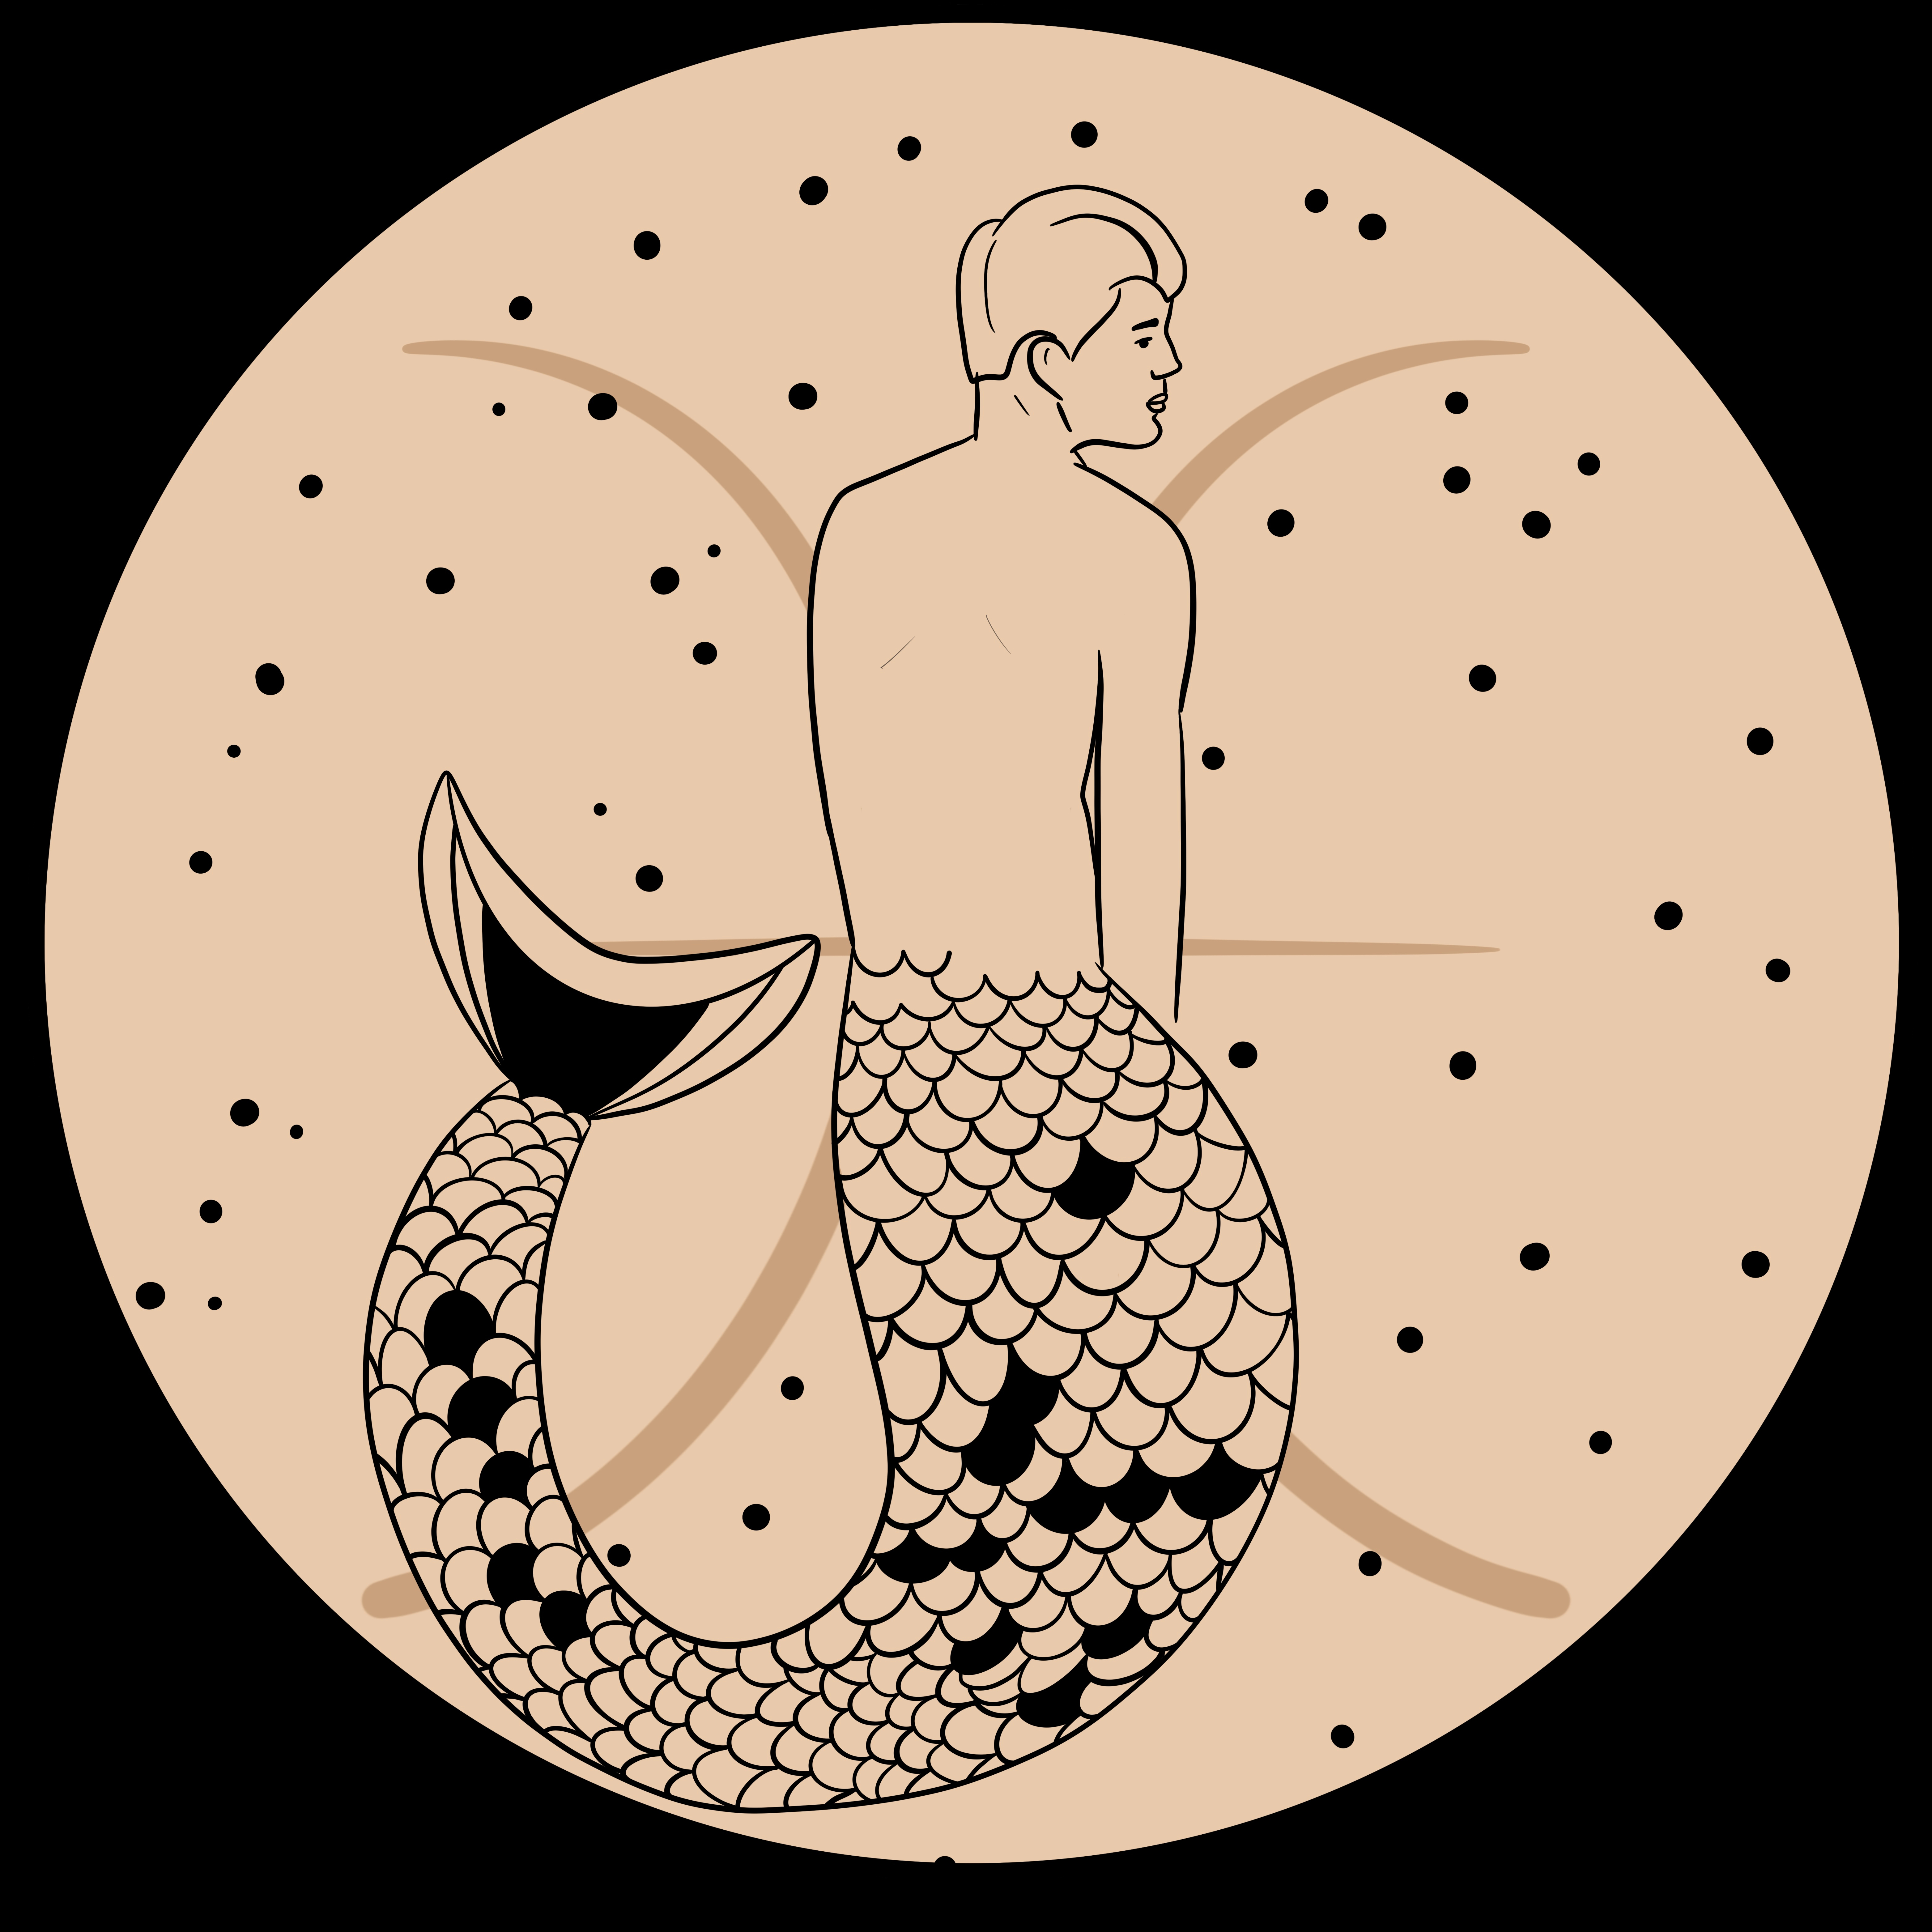 A fine line portrait of a merman representing Pisces | Source: Shutterstock